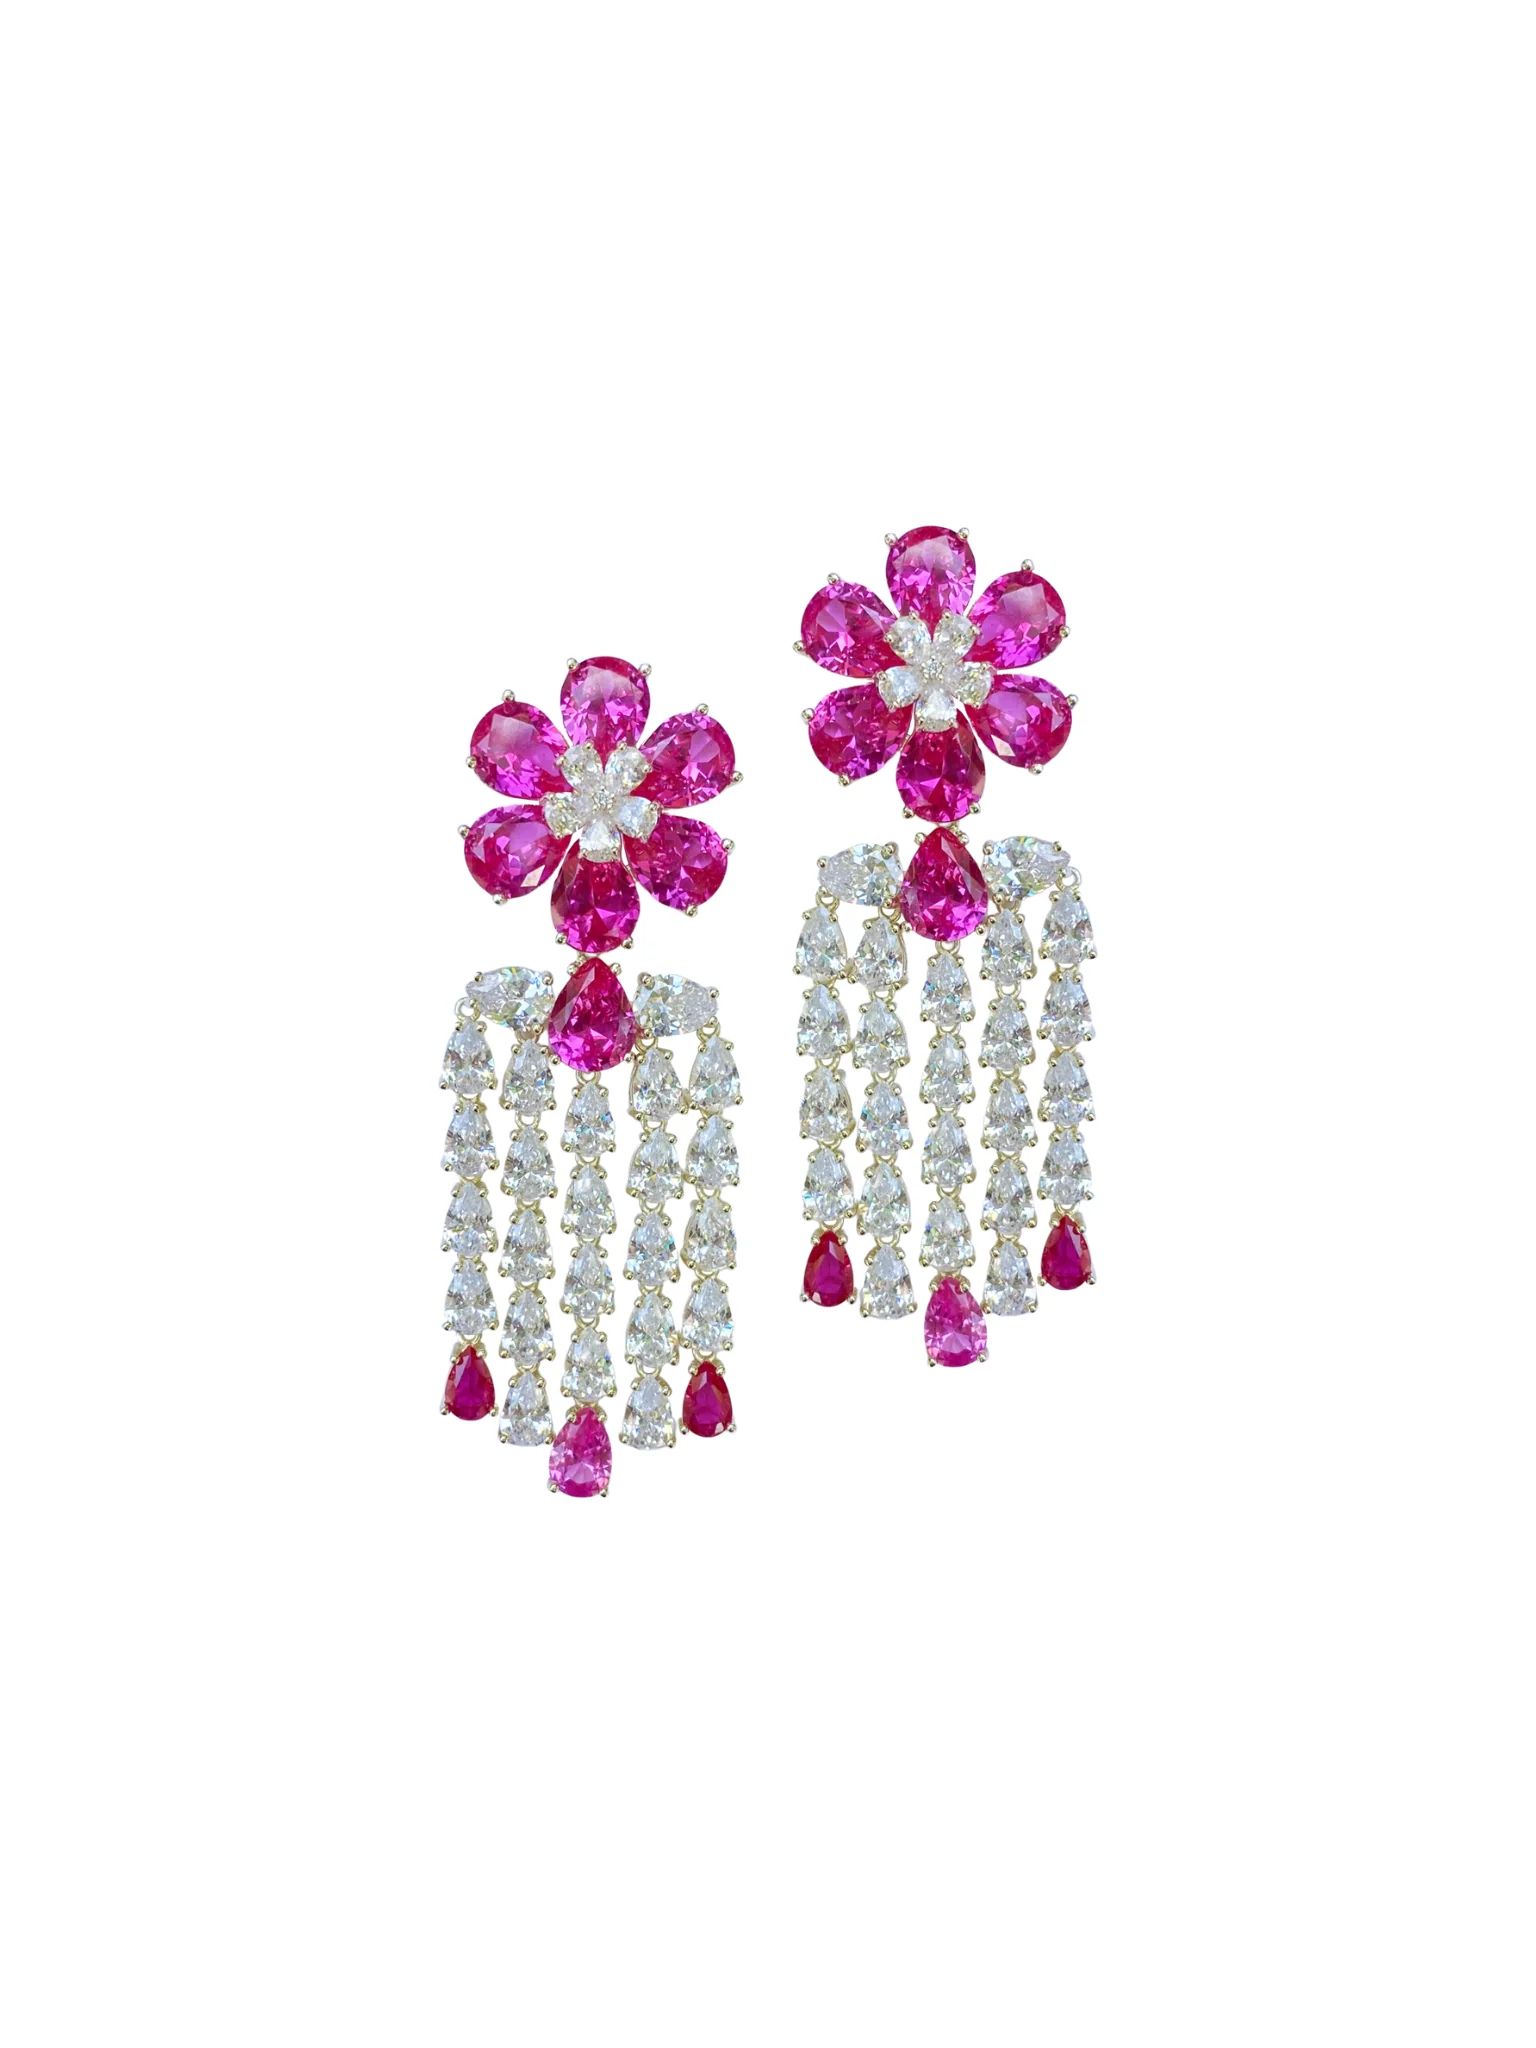 Magenta Flower + Embellished Tassels | Nicola Bathie Jewelry